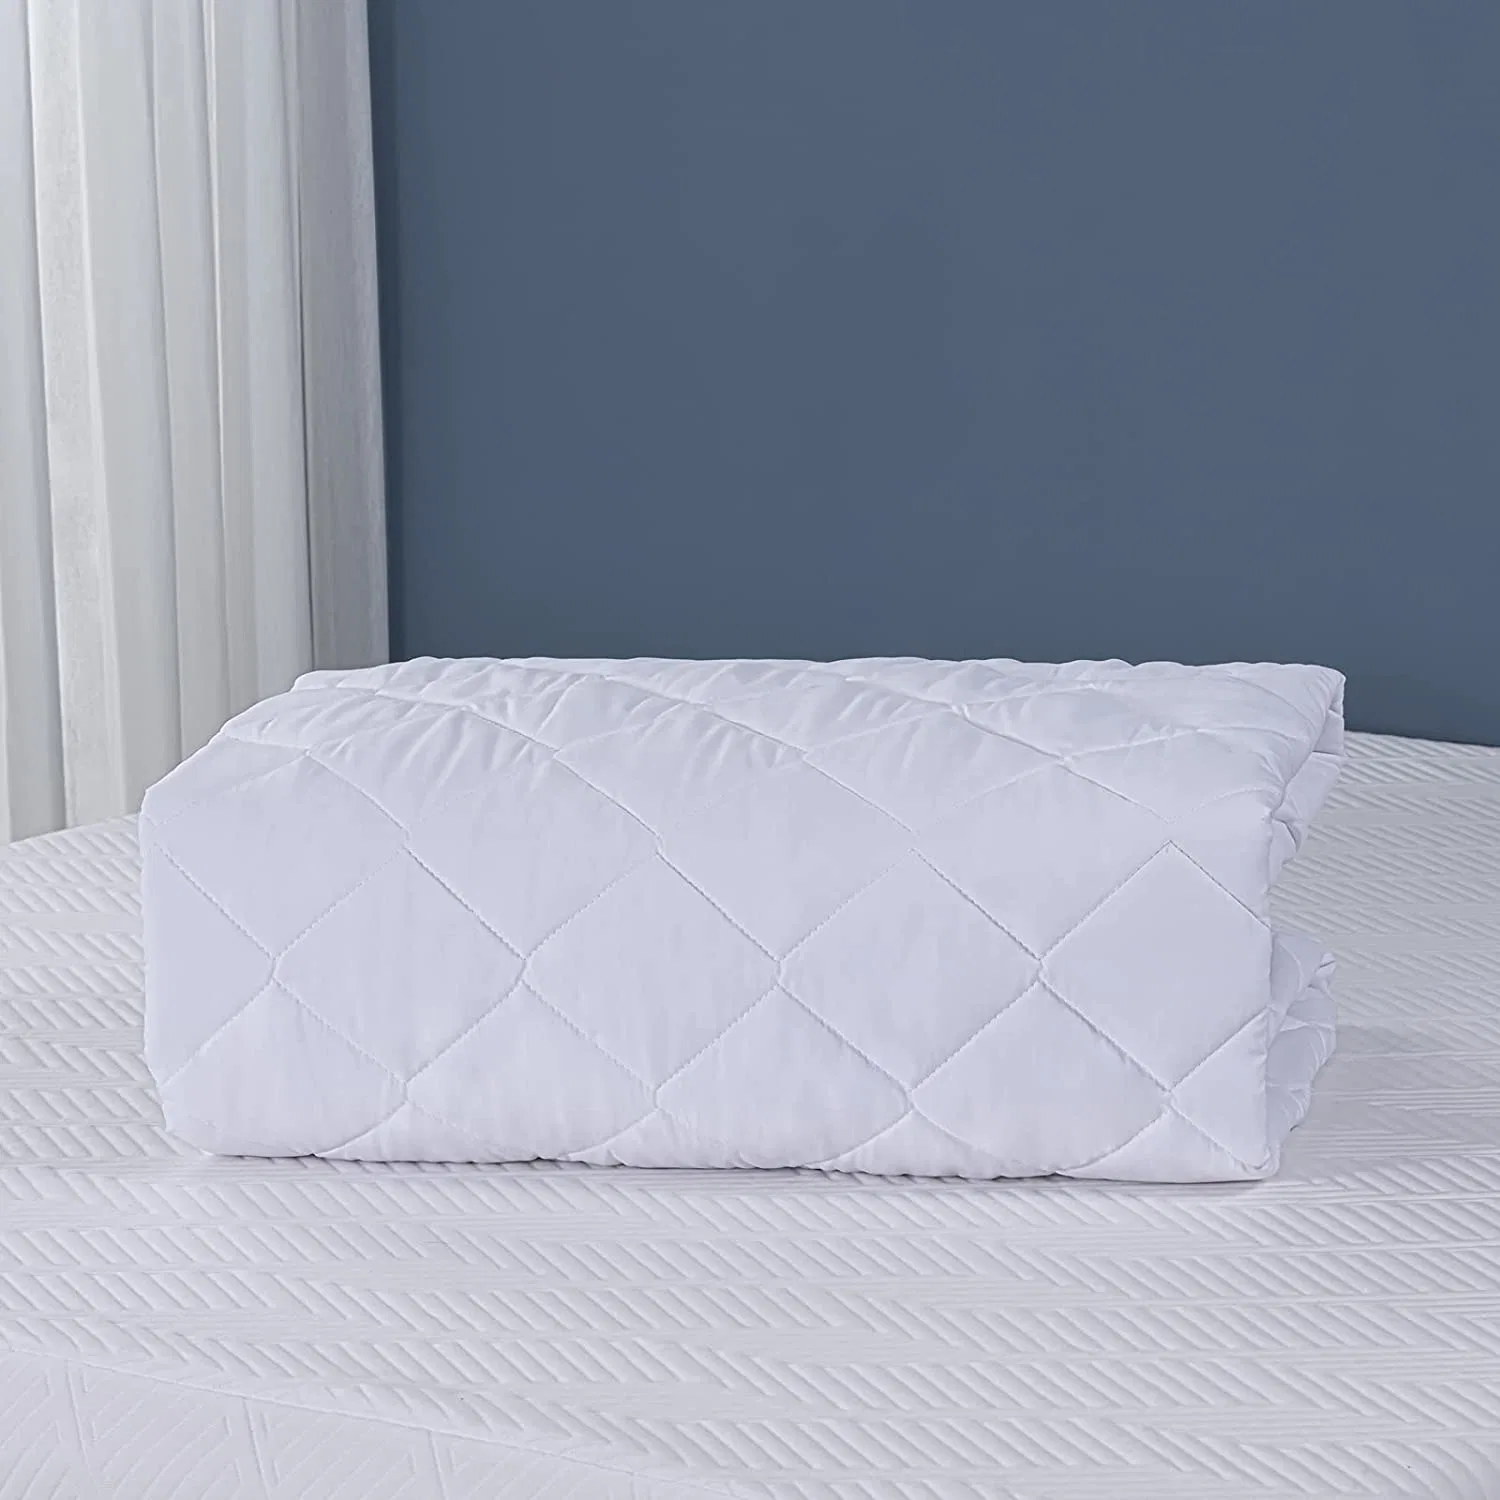 Mattress Protector Quilted Fitted Premium Hypoallergenic Waterproof Cotton Mattress Pads Baby Crib Mattress Pad